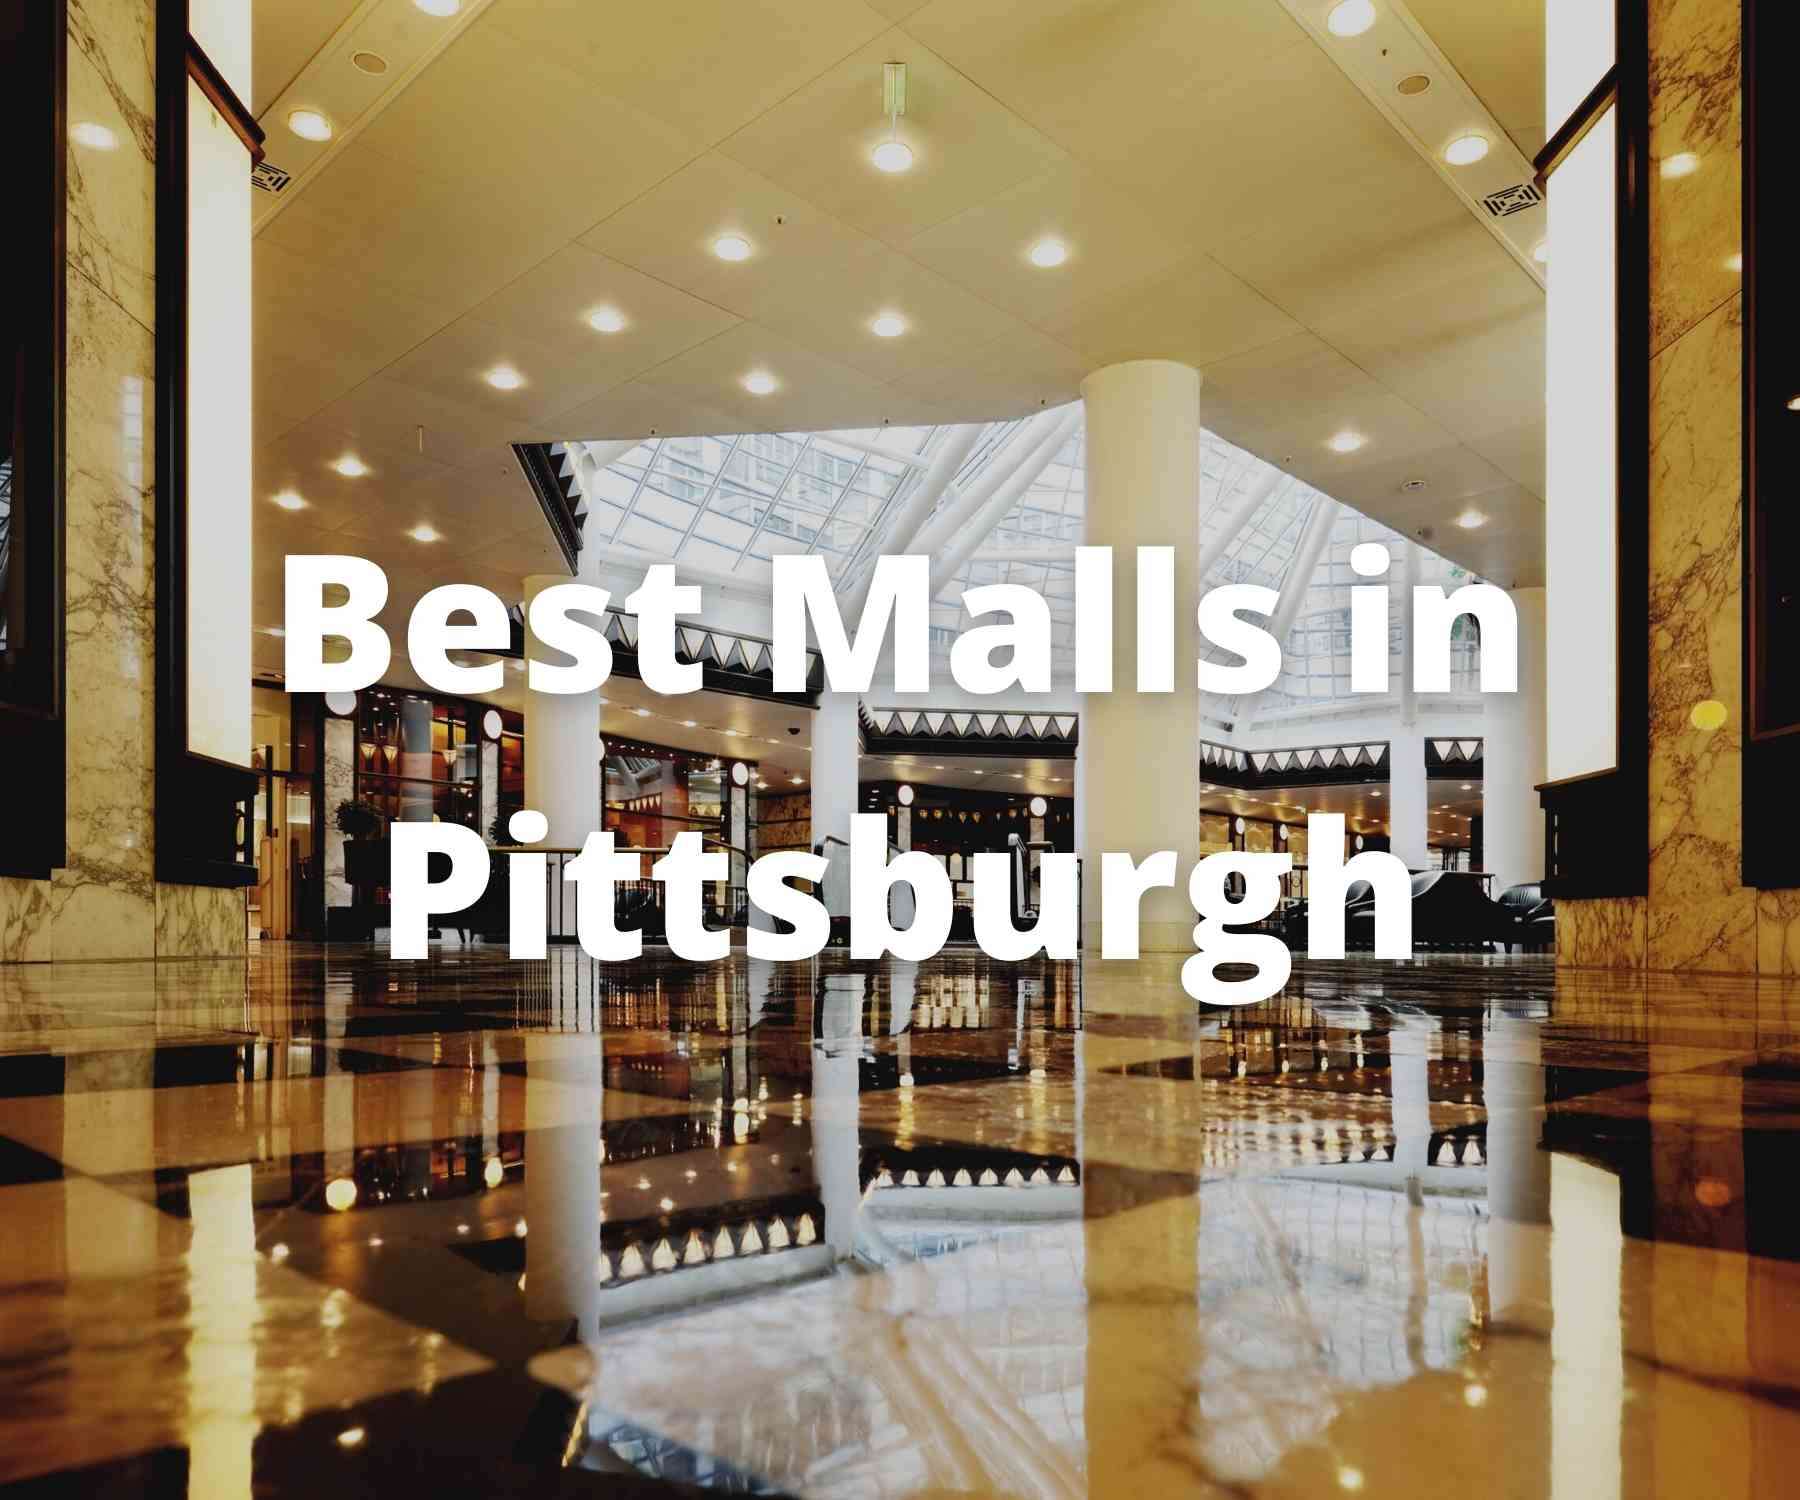 Ross Park Mall  Shopping mall in Pennsylvania